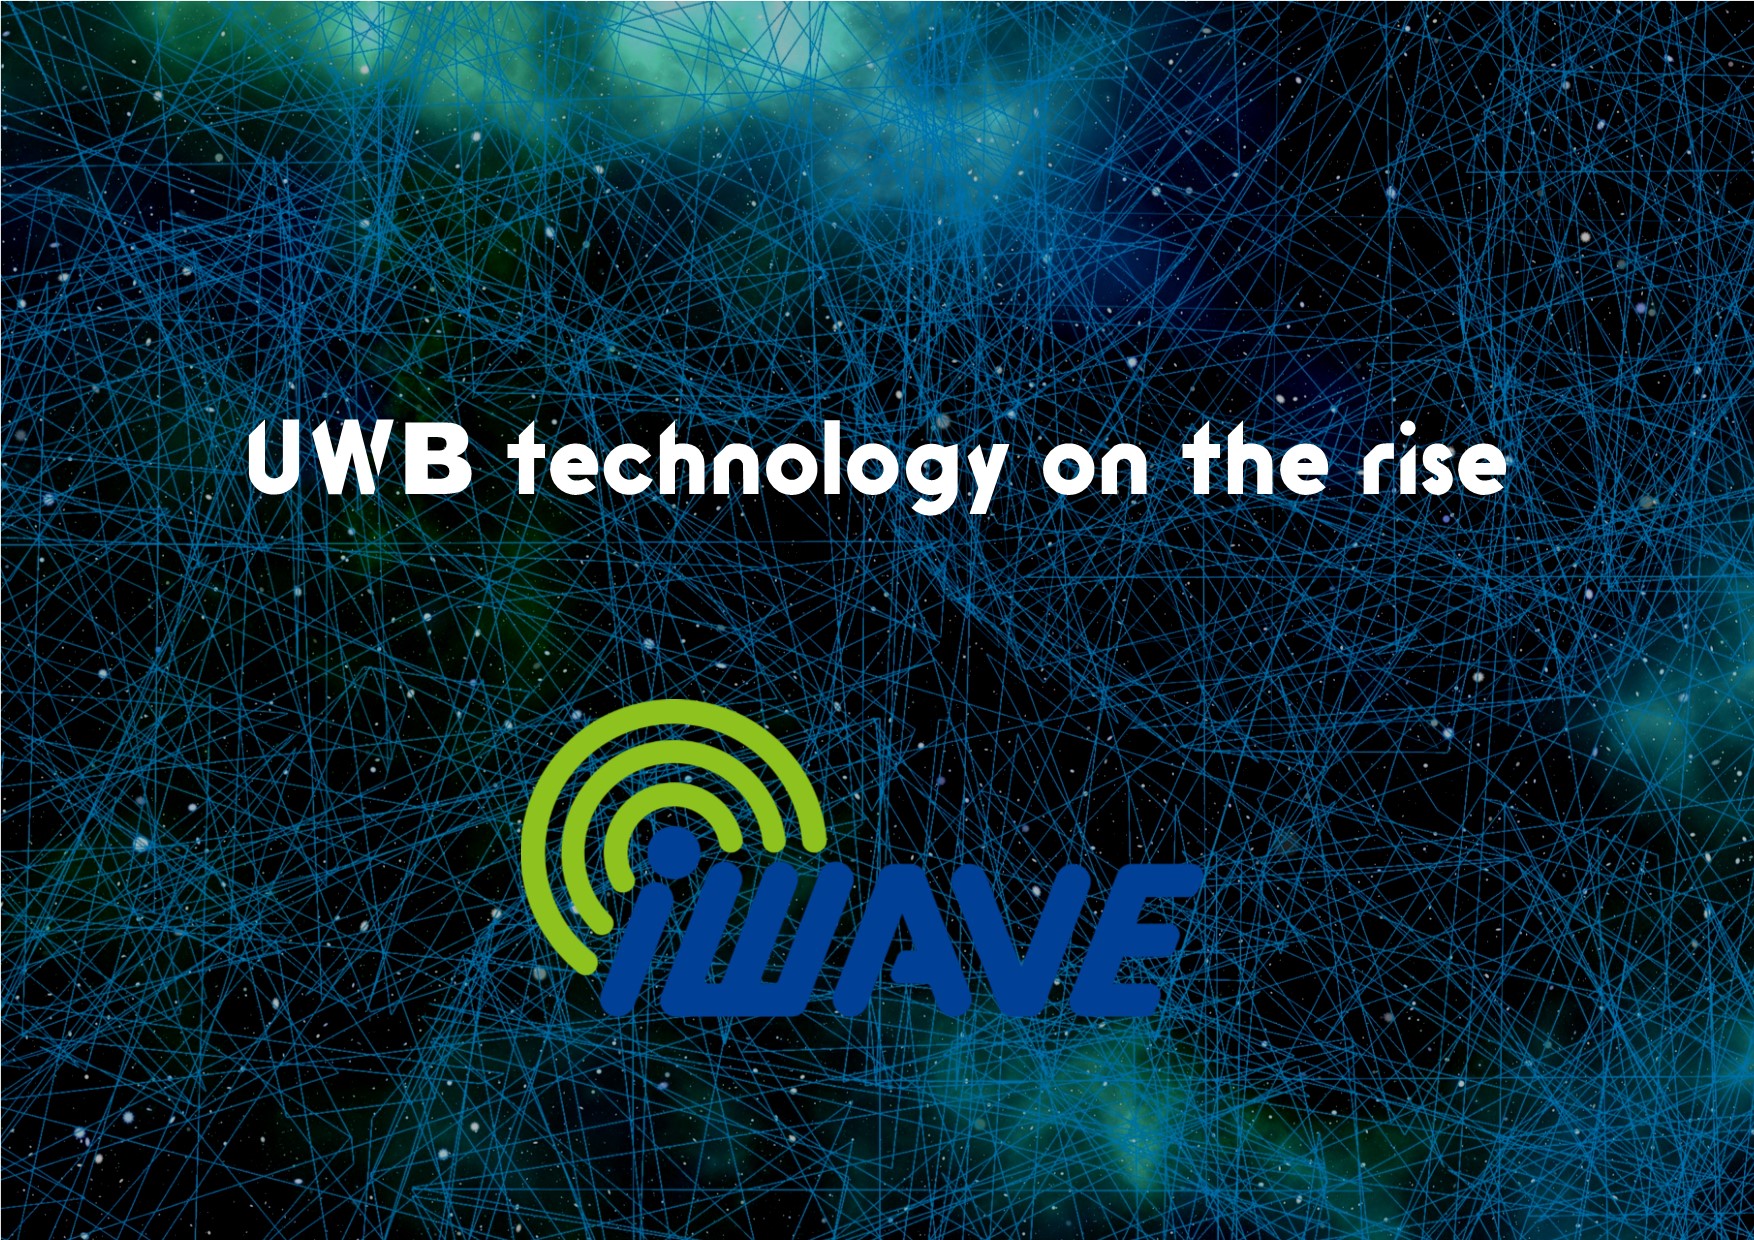 UWB iwavenology